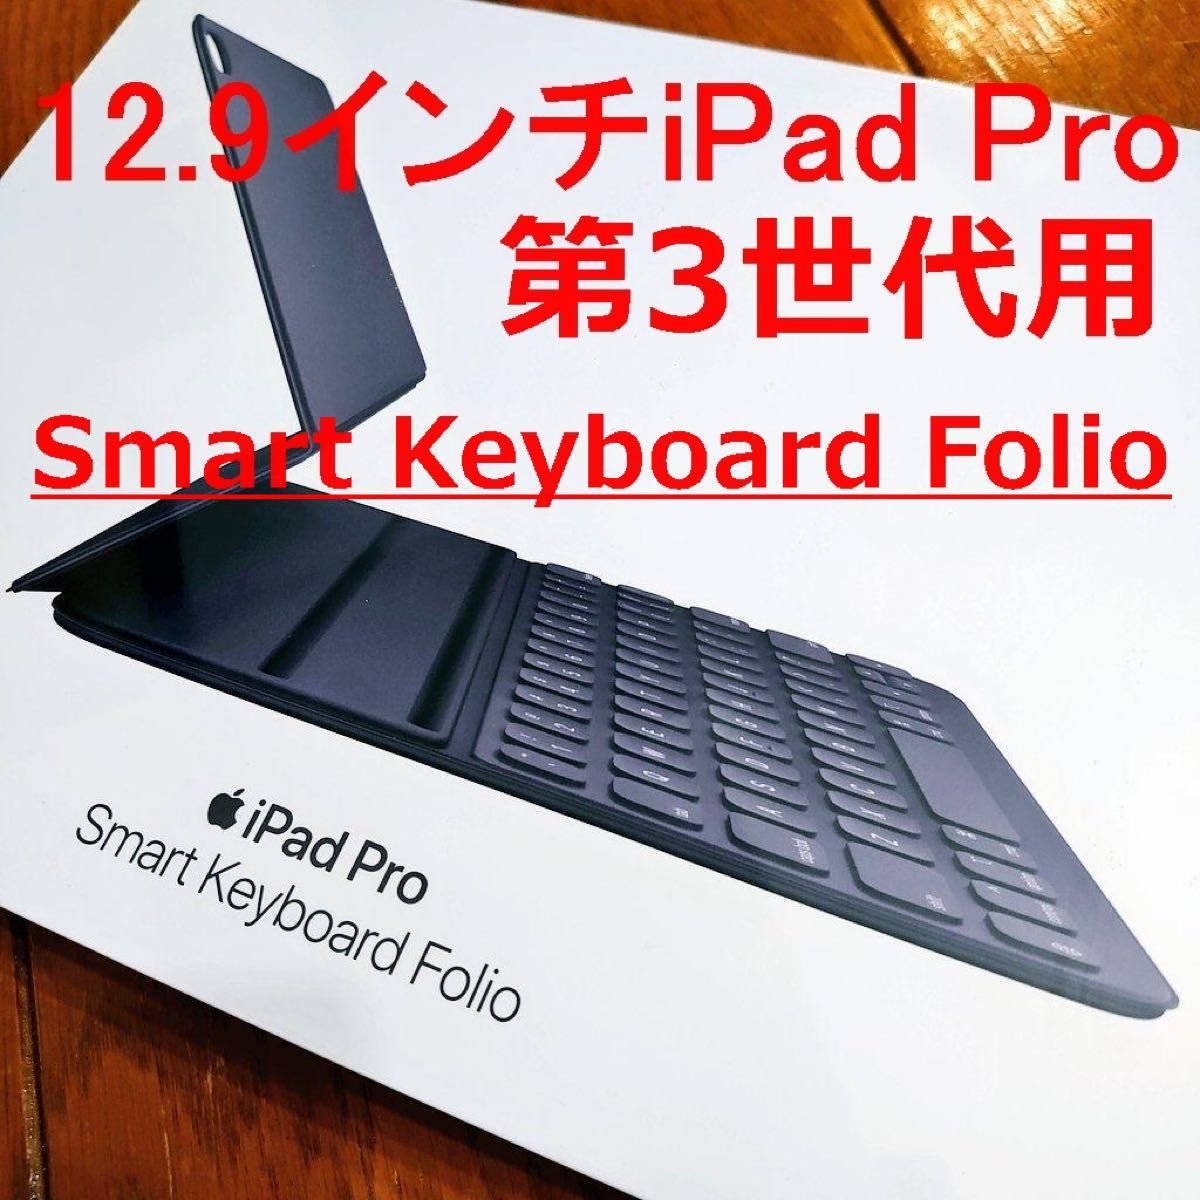 Apple 12 9インチiPad Pro 第3世代用 英字Smart Keyboard Folio 日米語